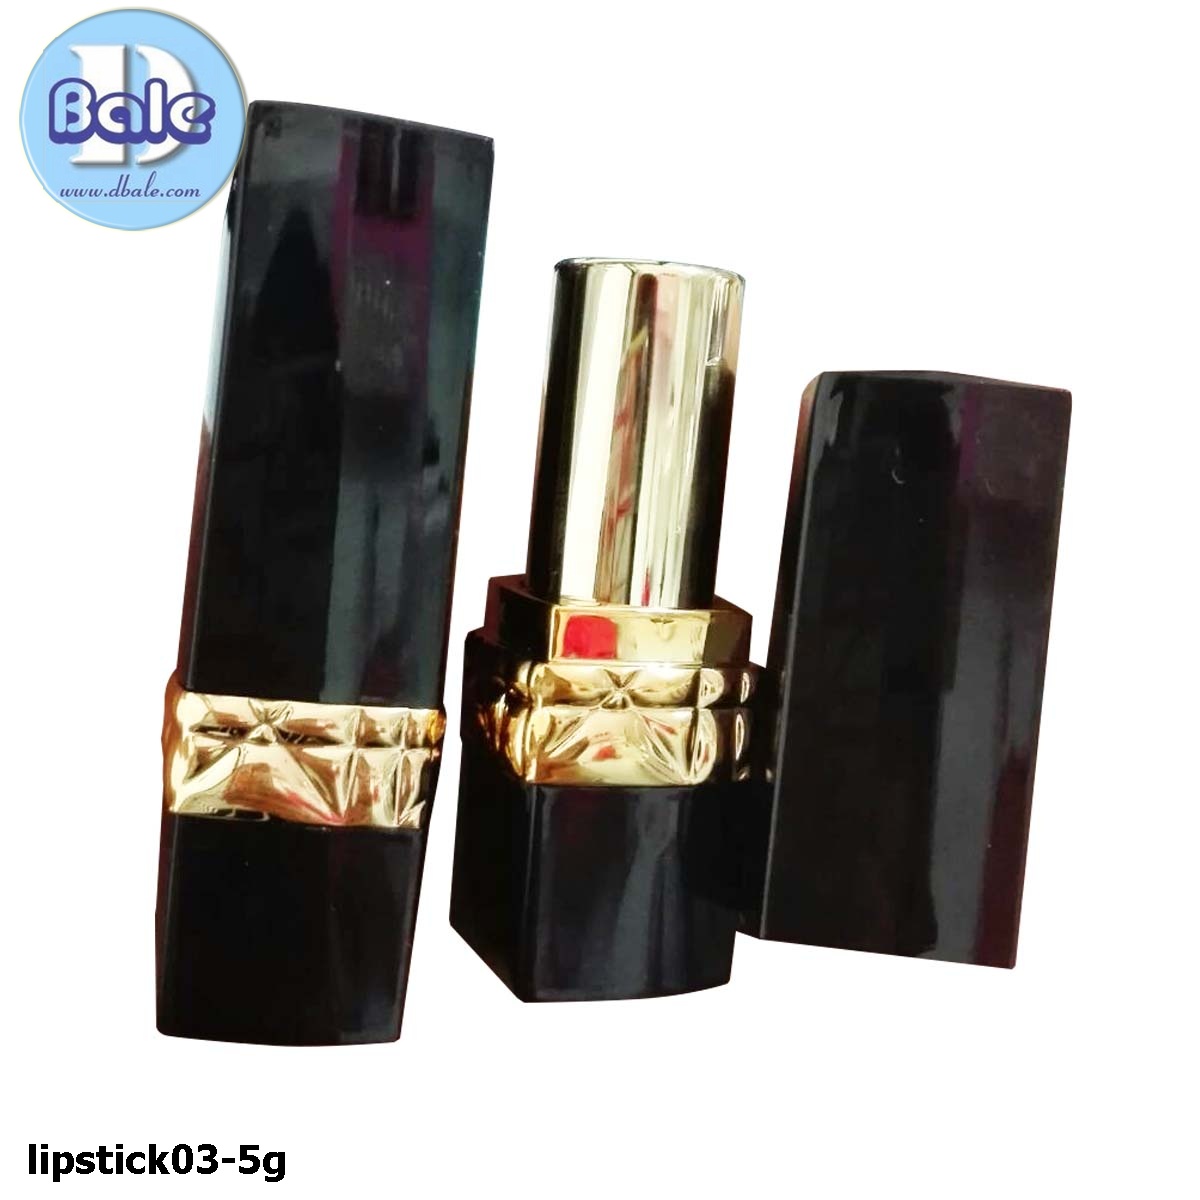 lipstick03-5g ลิปสติกสีดำ แท่ง